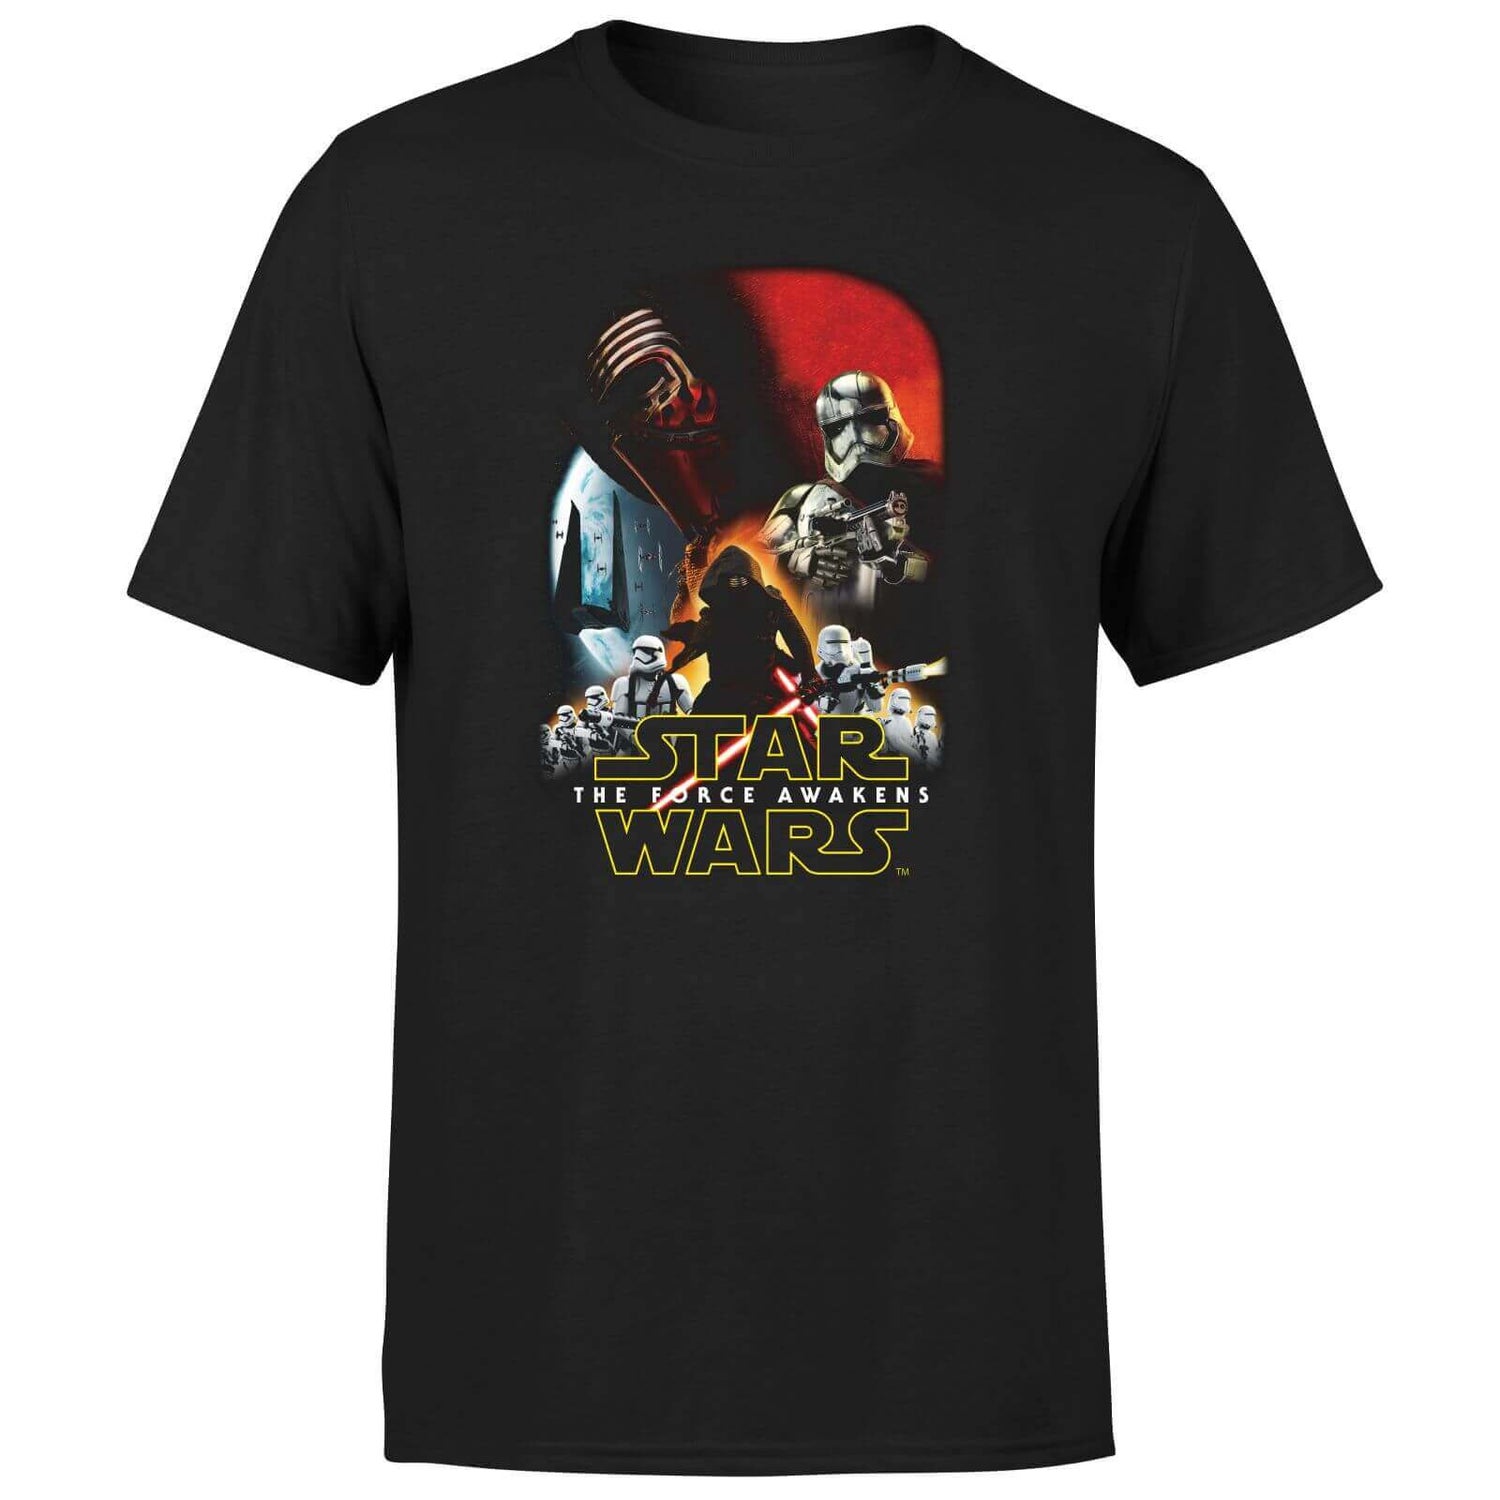 Star Wars The Force Awakens Unisex T-Shirt - Black